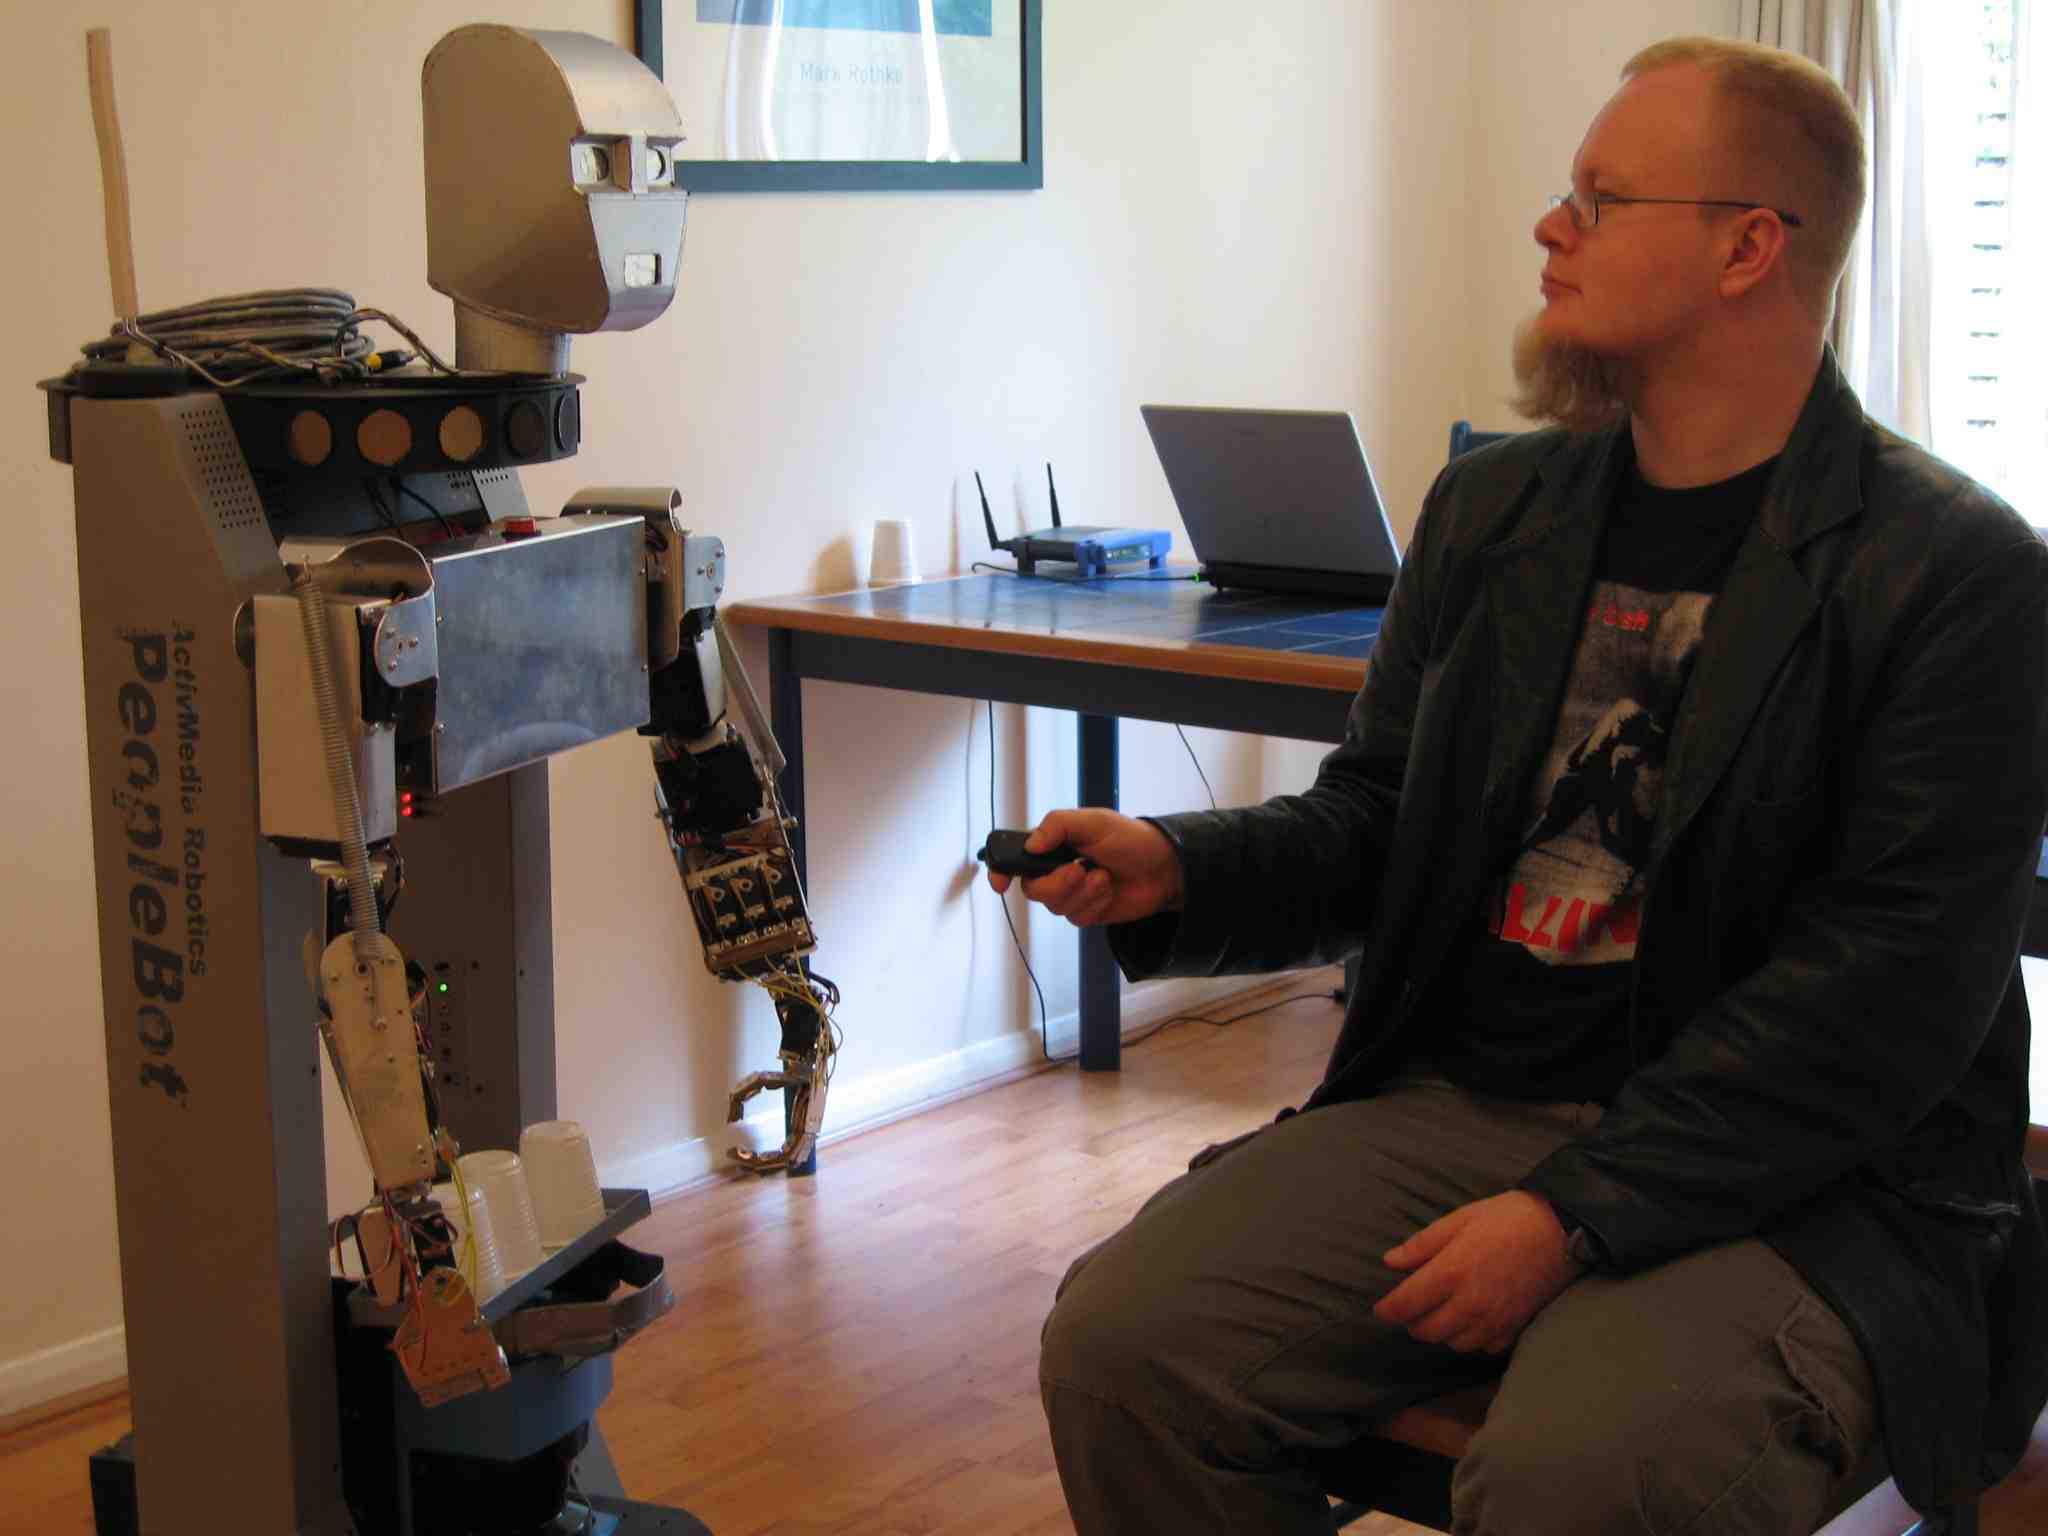 A Humanoid robot approaches a human